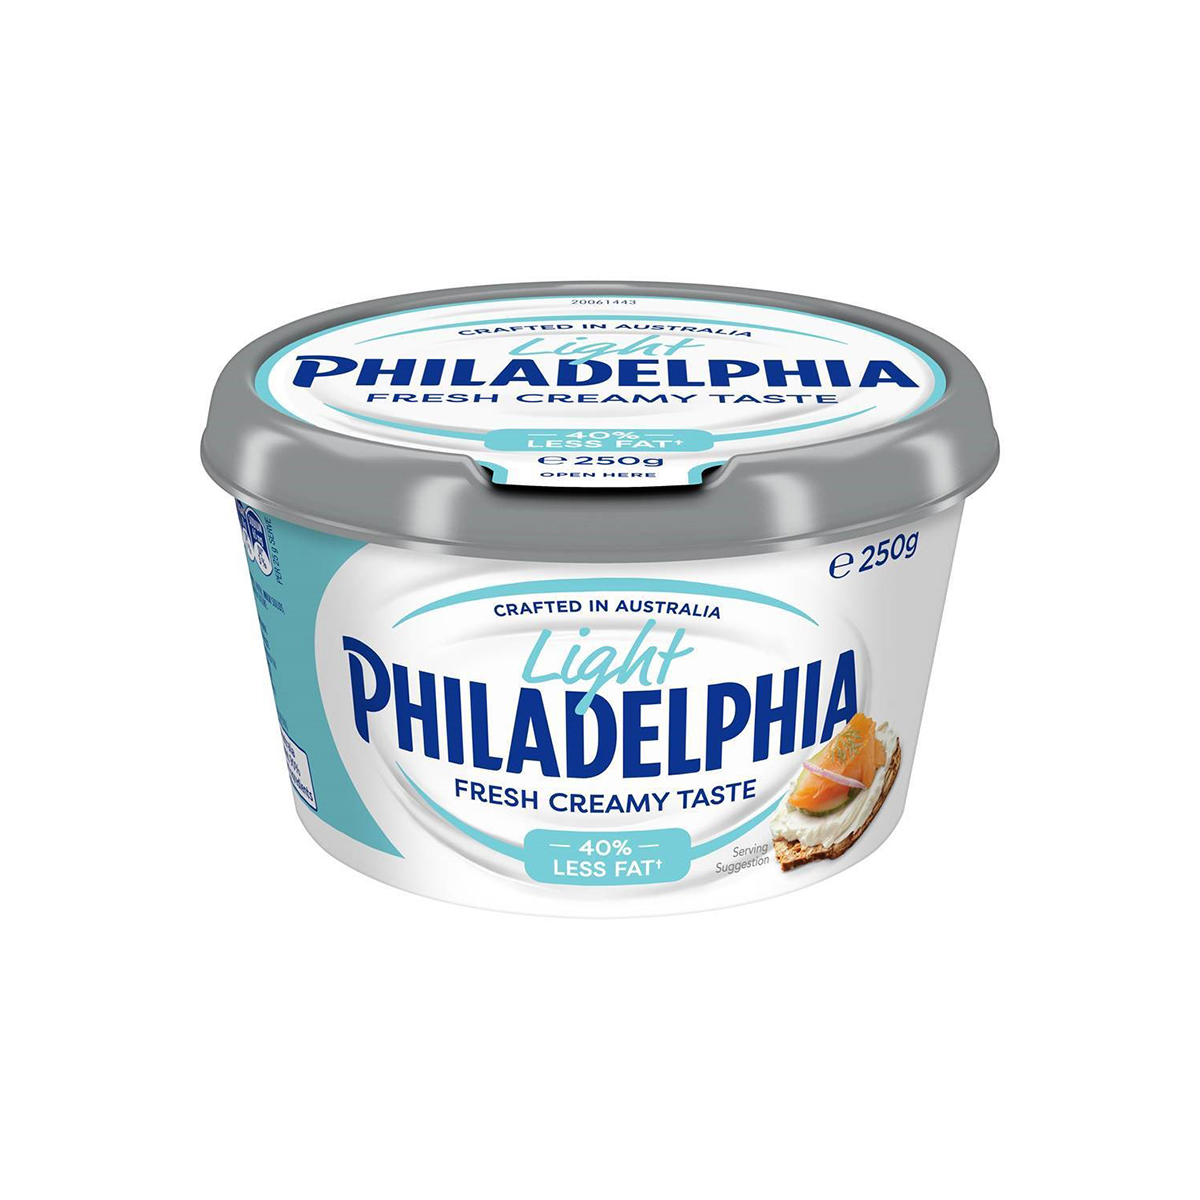 is philadelphia cream cheese spread gluten free